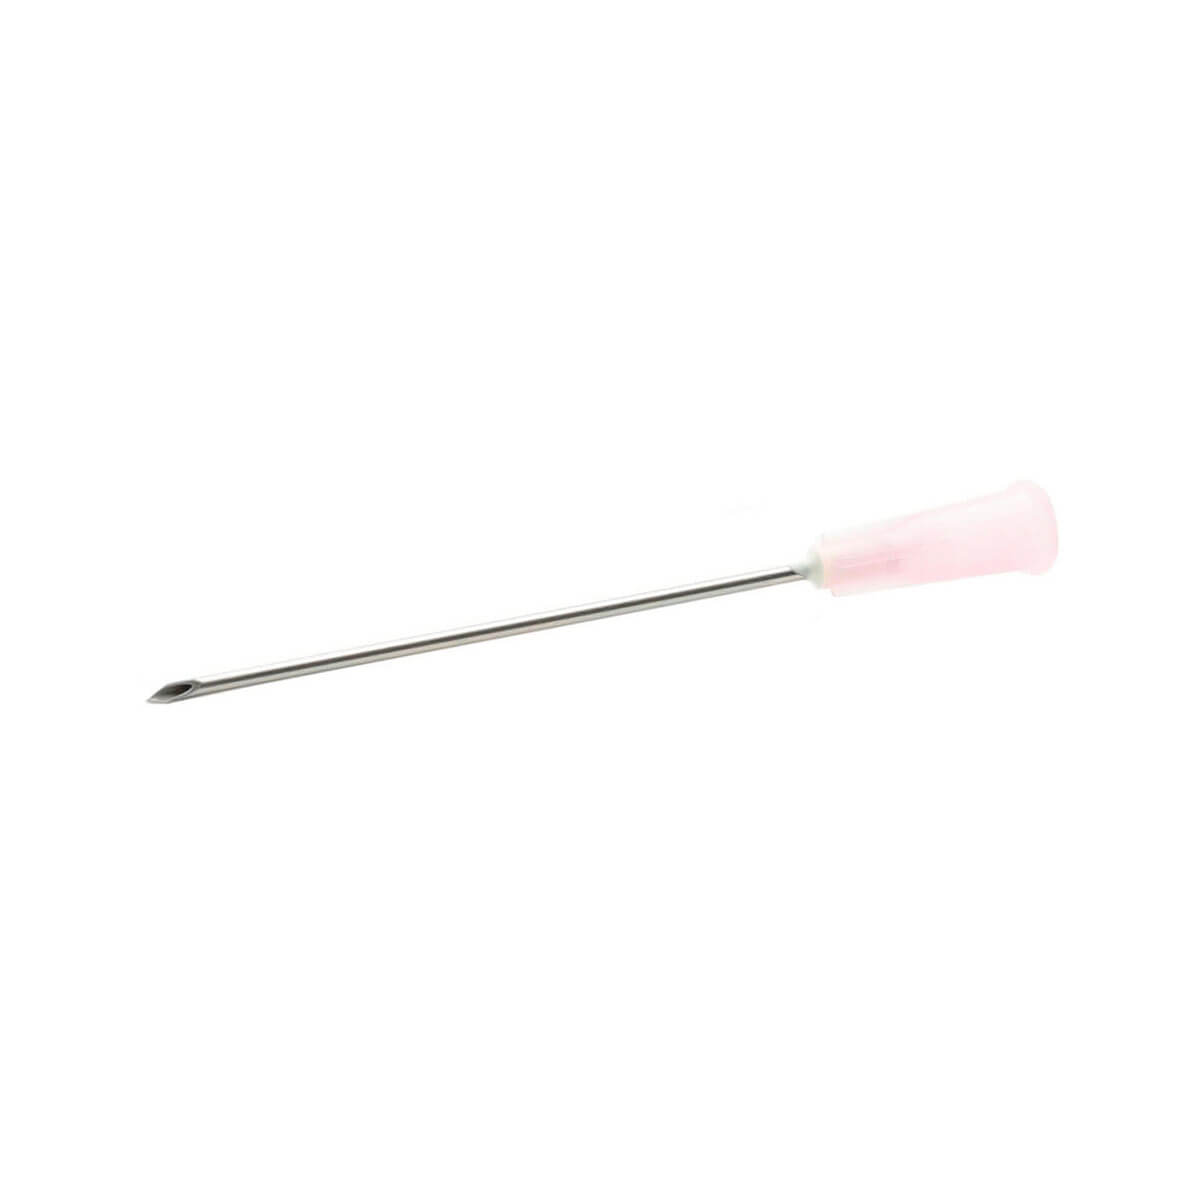 BD Microlance Needle Pink 18G 50MM